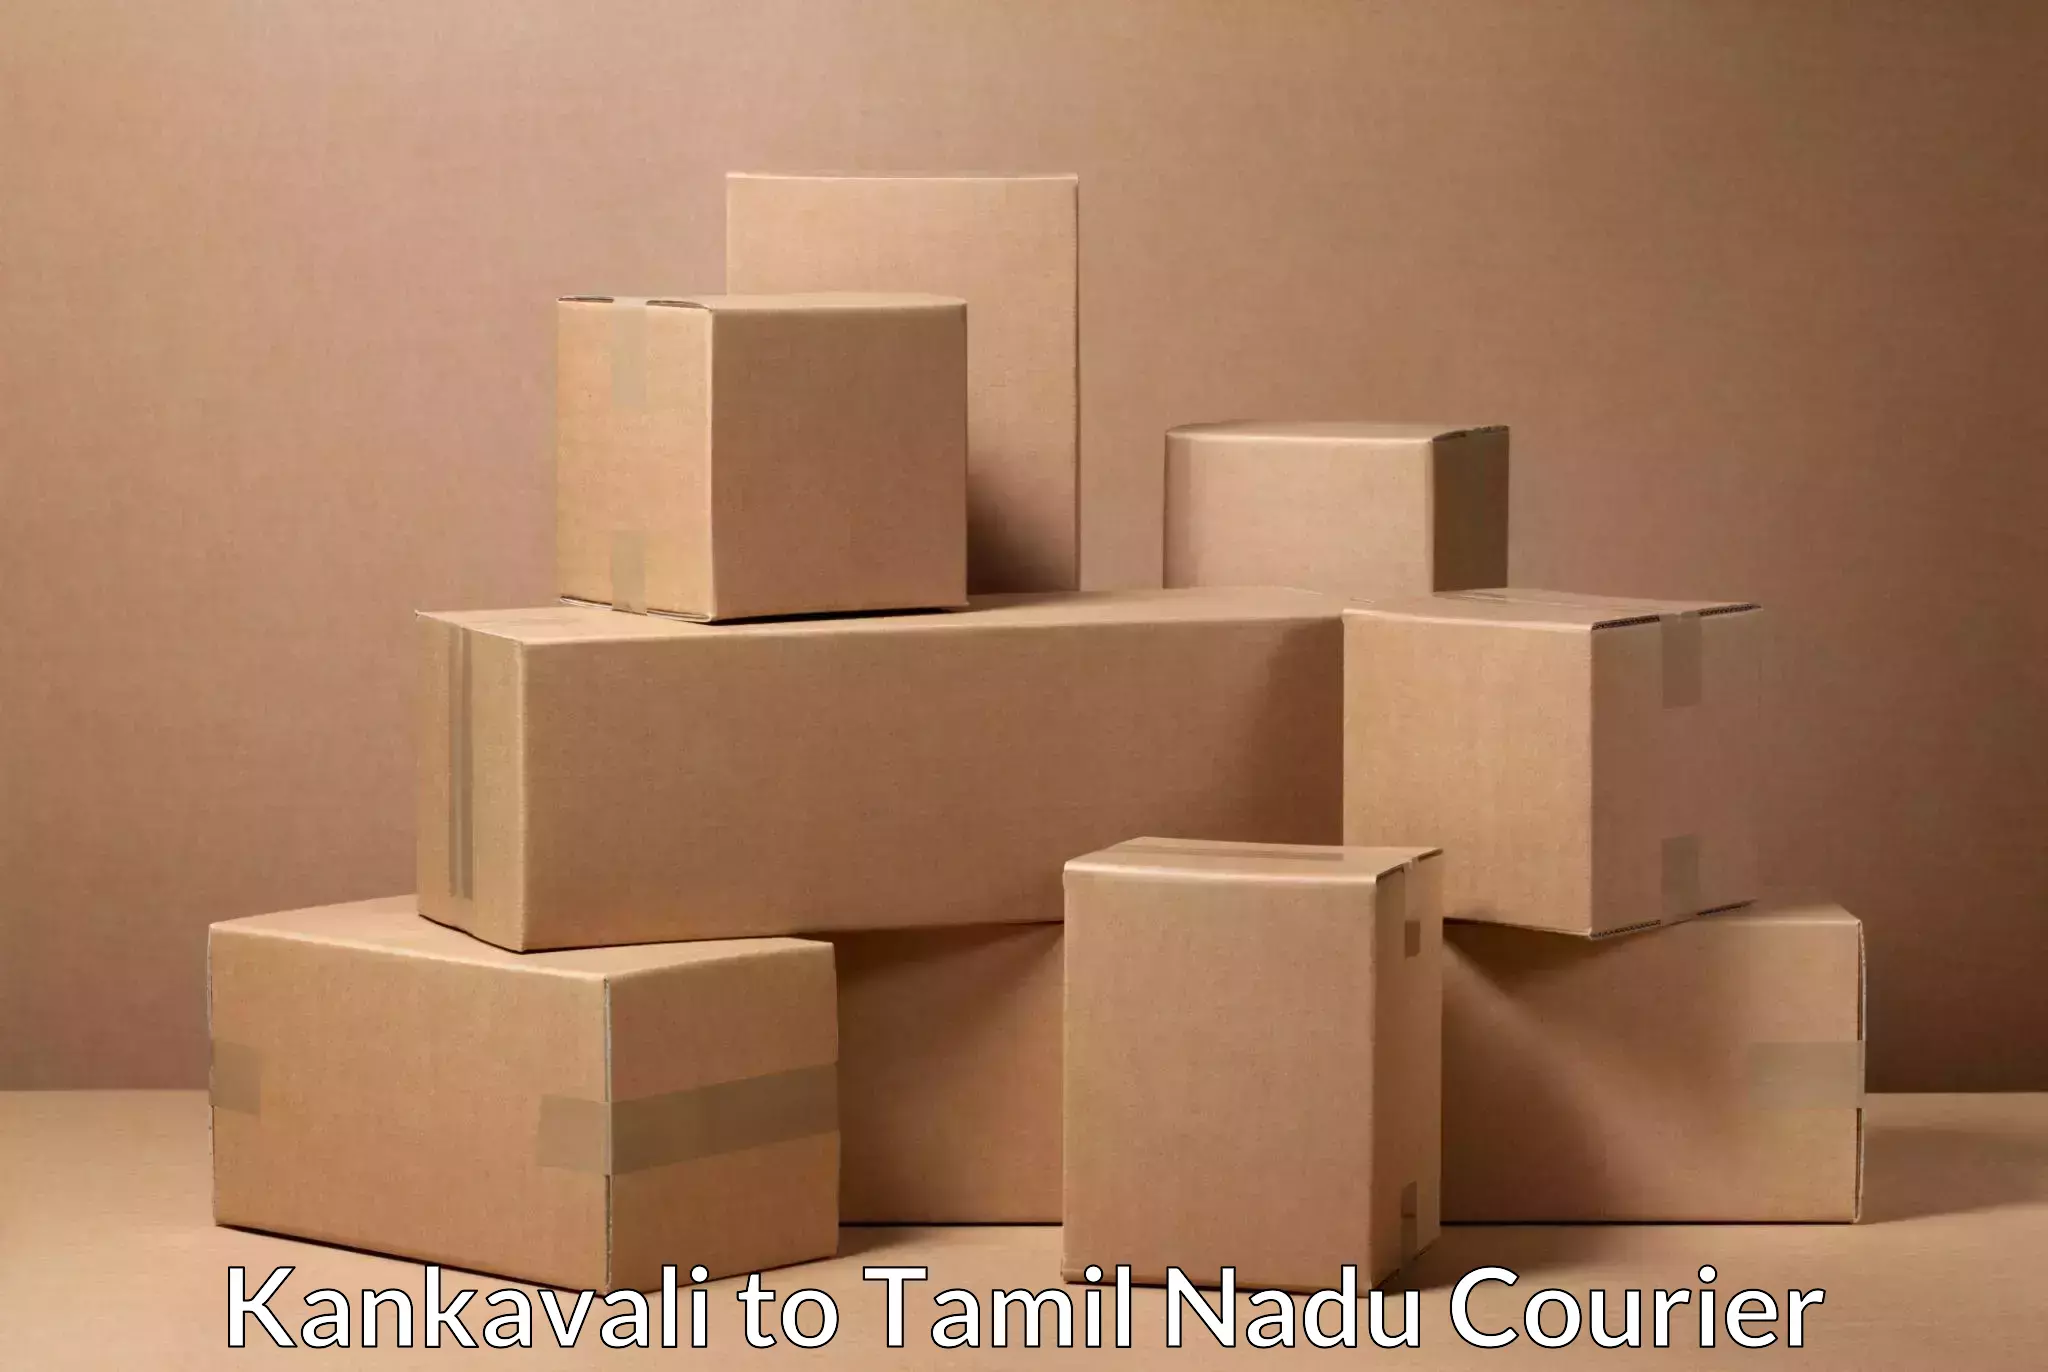 Global courier networks Kankavali to Dharmapuri